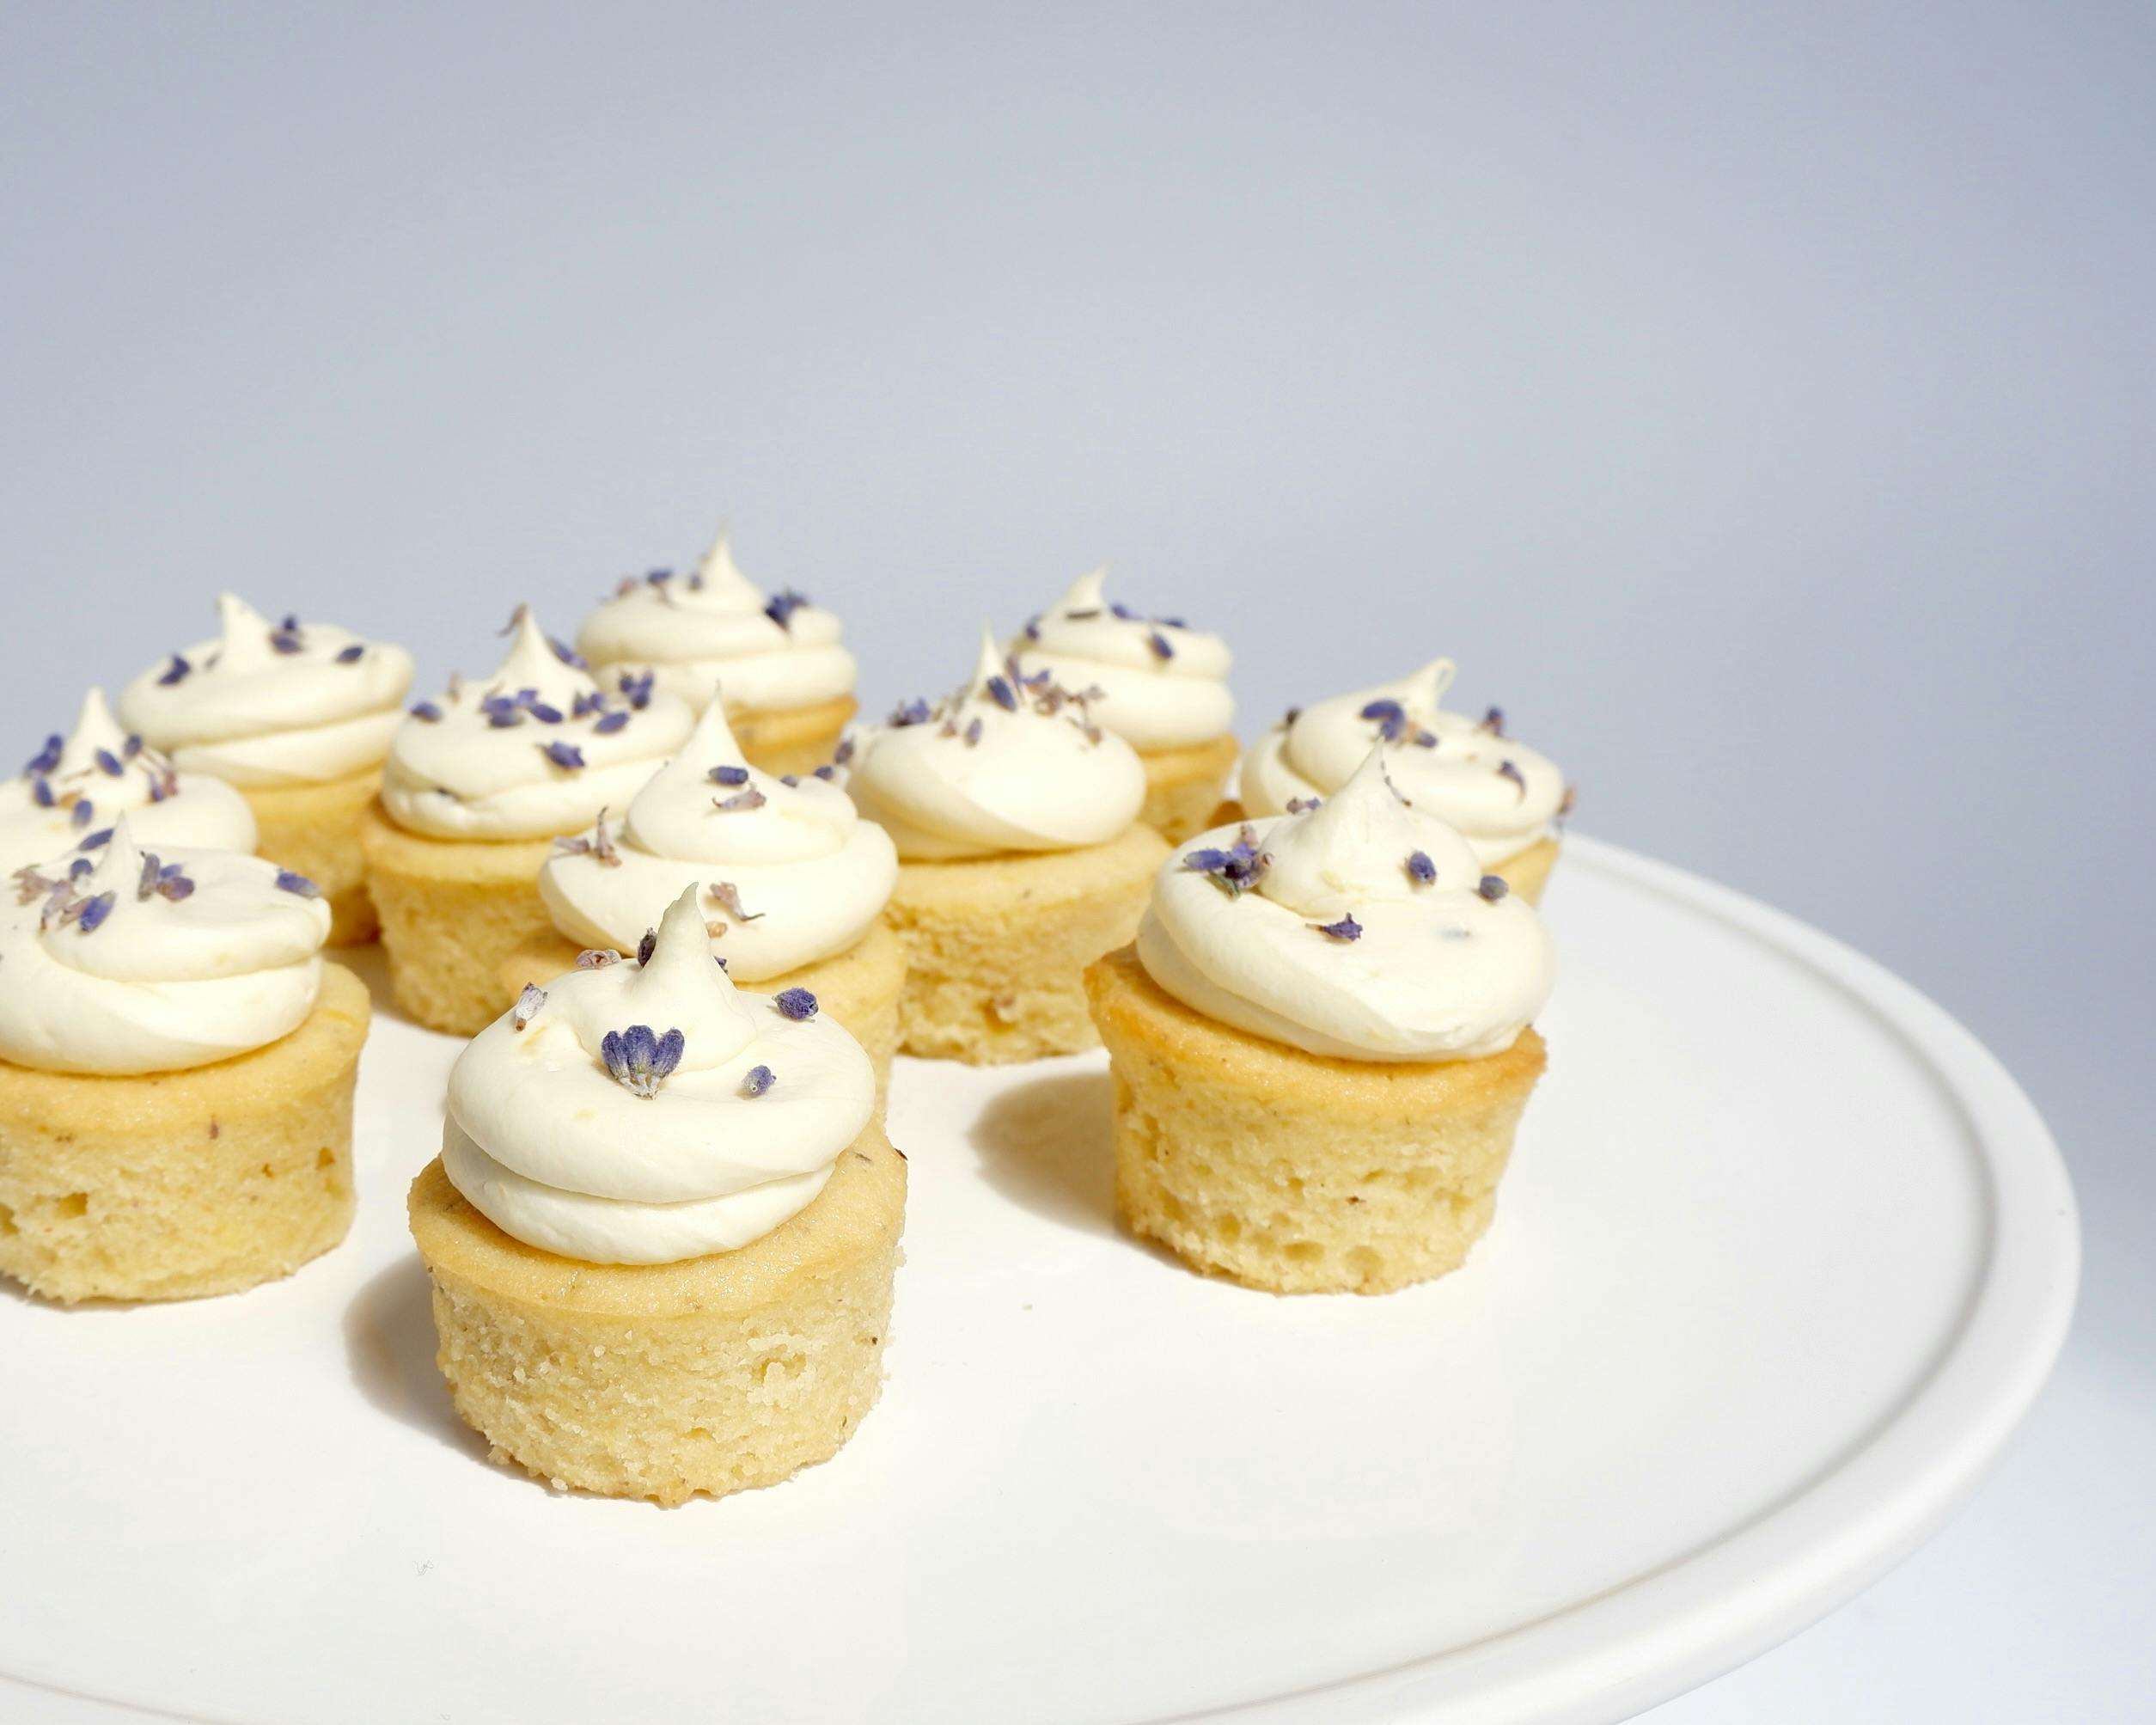 https://the-caker.imgix.net/media/pages/jordan/recipes/lavender-baby-cakes-with-lemony-mascarpone/9de6cab8df-1679582116/dscf5677.jpg?auto=compress